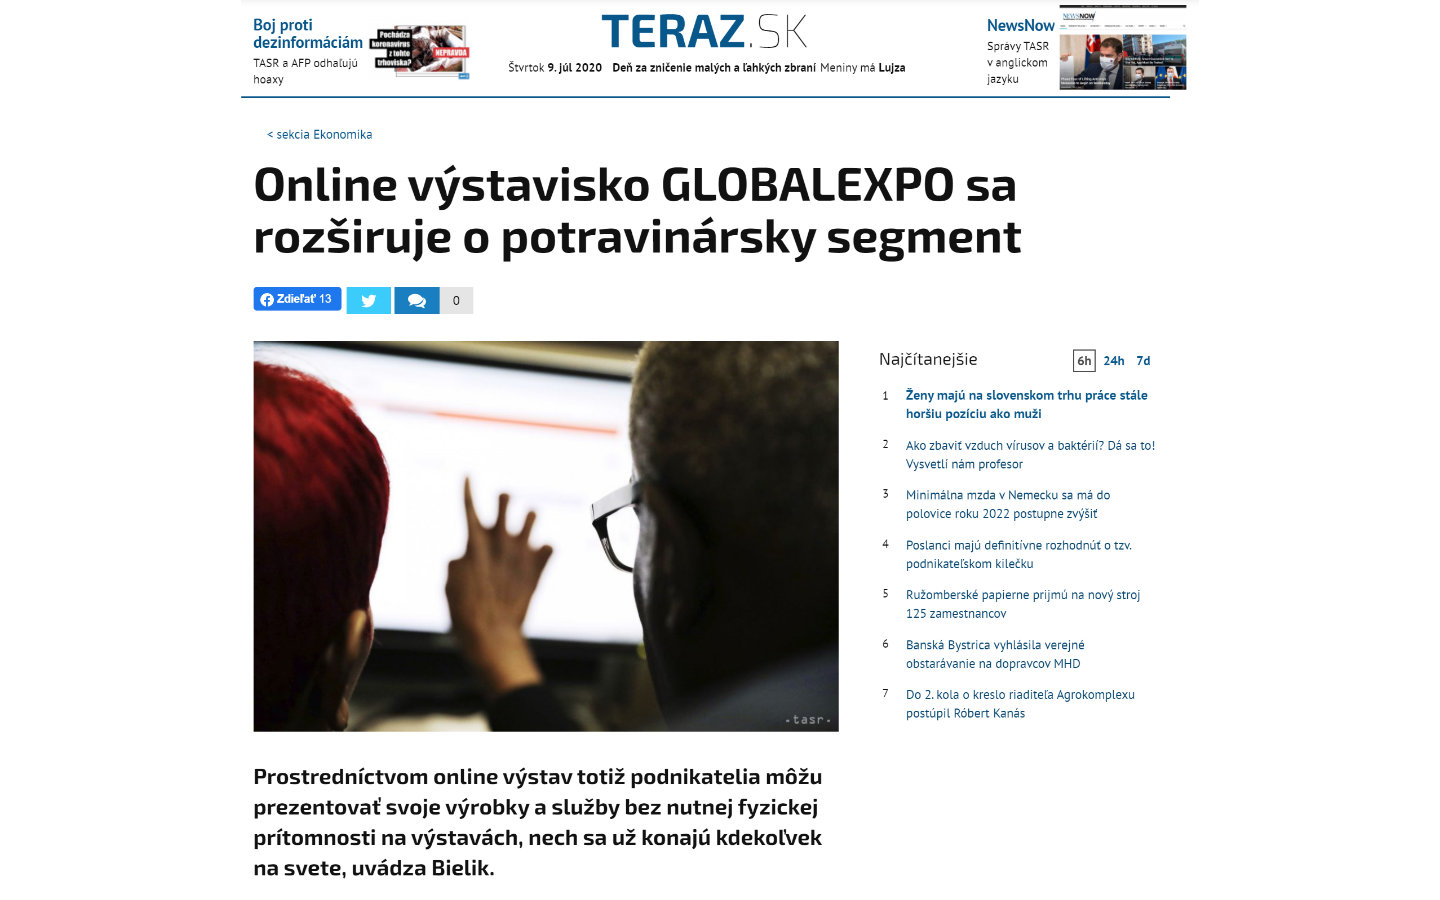 Online GLOBALEXPO exhibition center on TV TA3